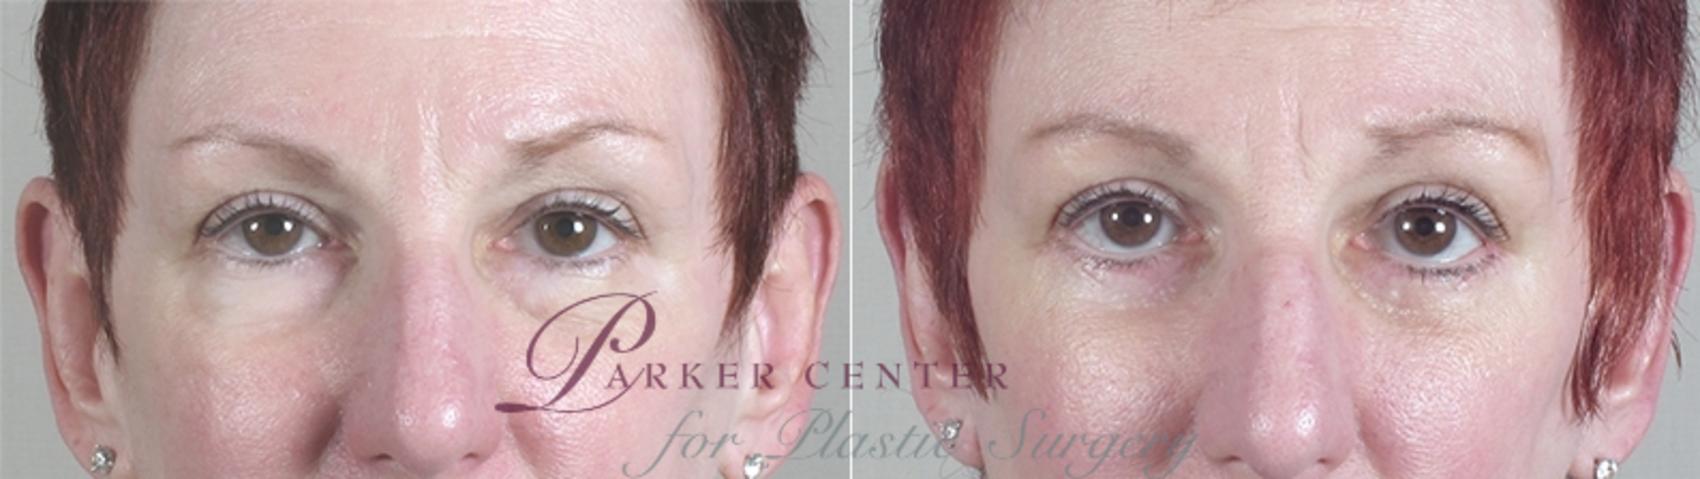 Eyelid Lift Case 26 Before & After View #11 | Paramus, NJ | Parker Center for Plastic Surgery